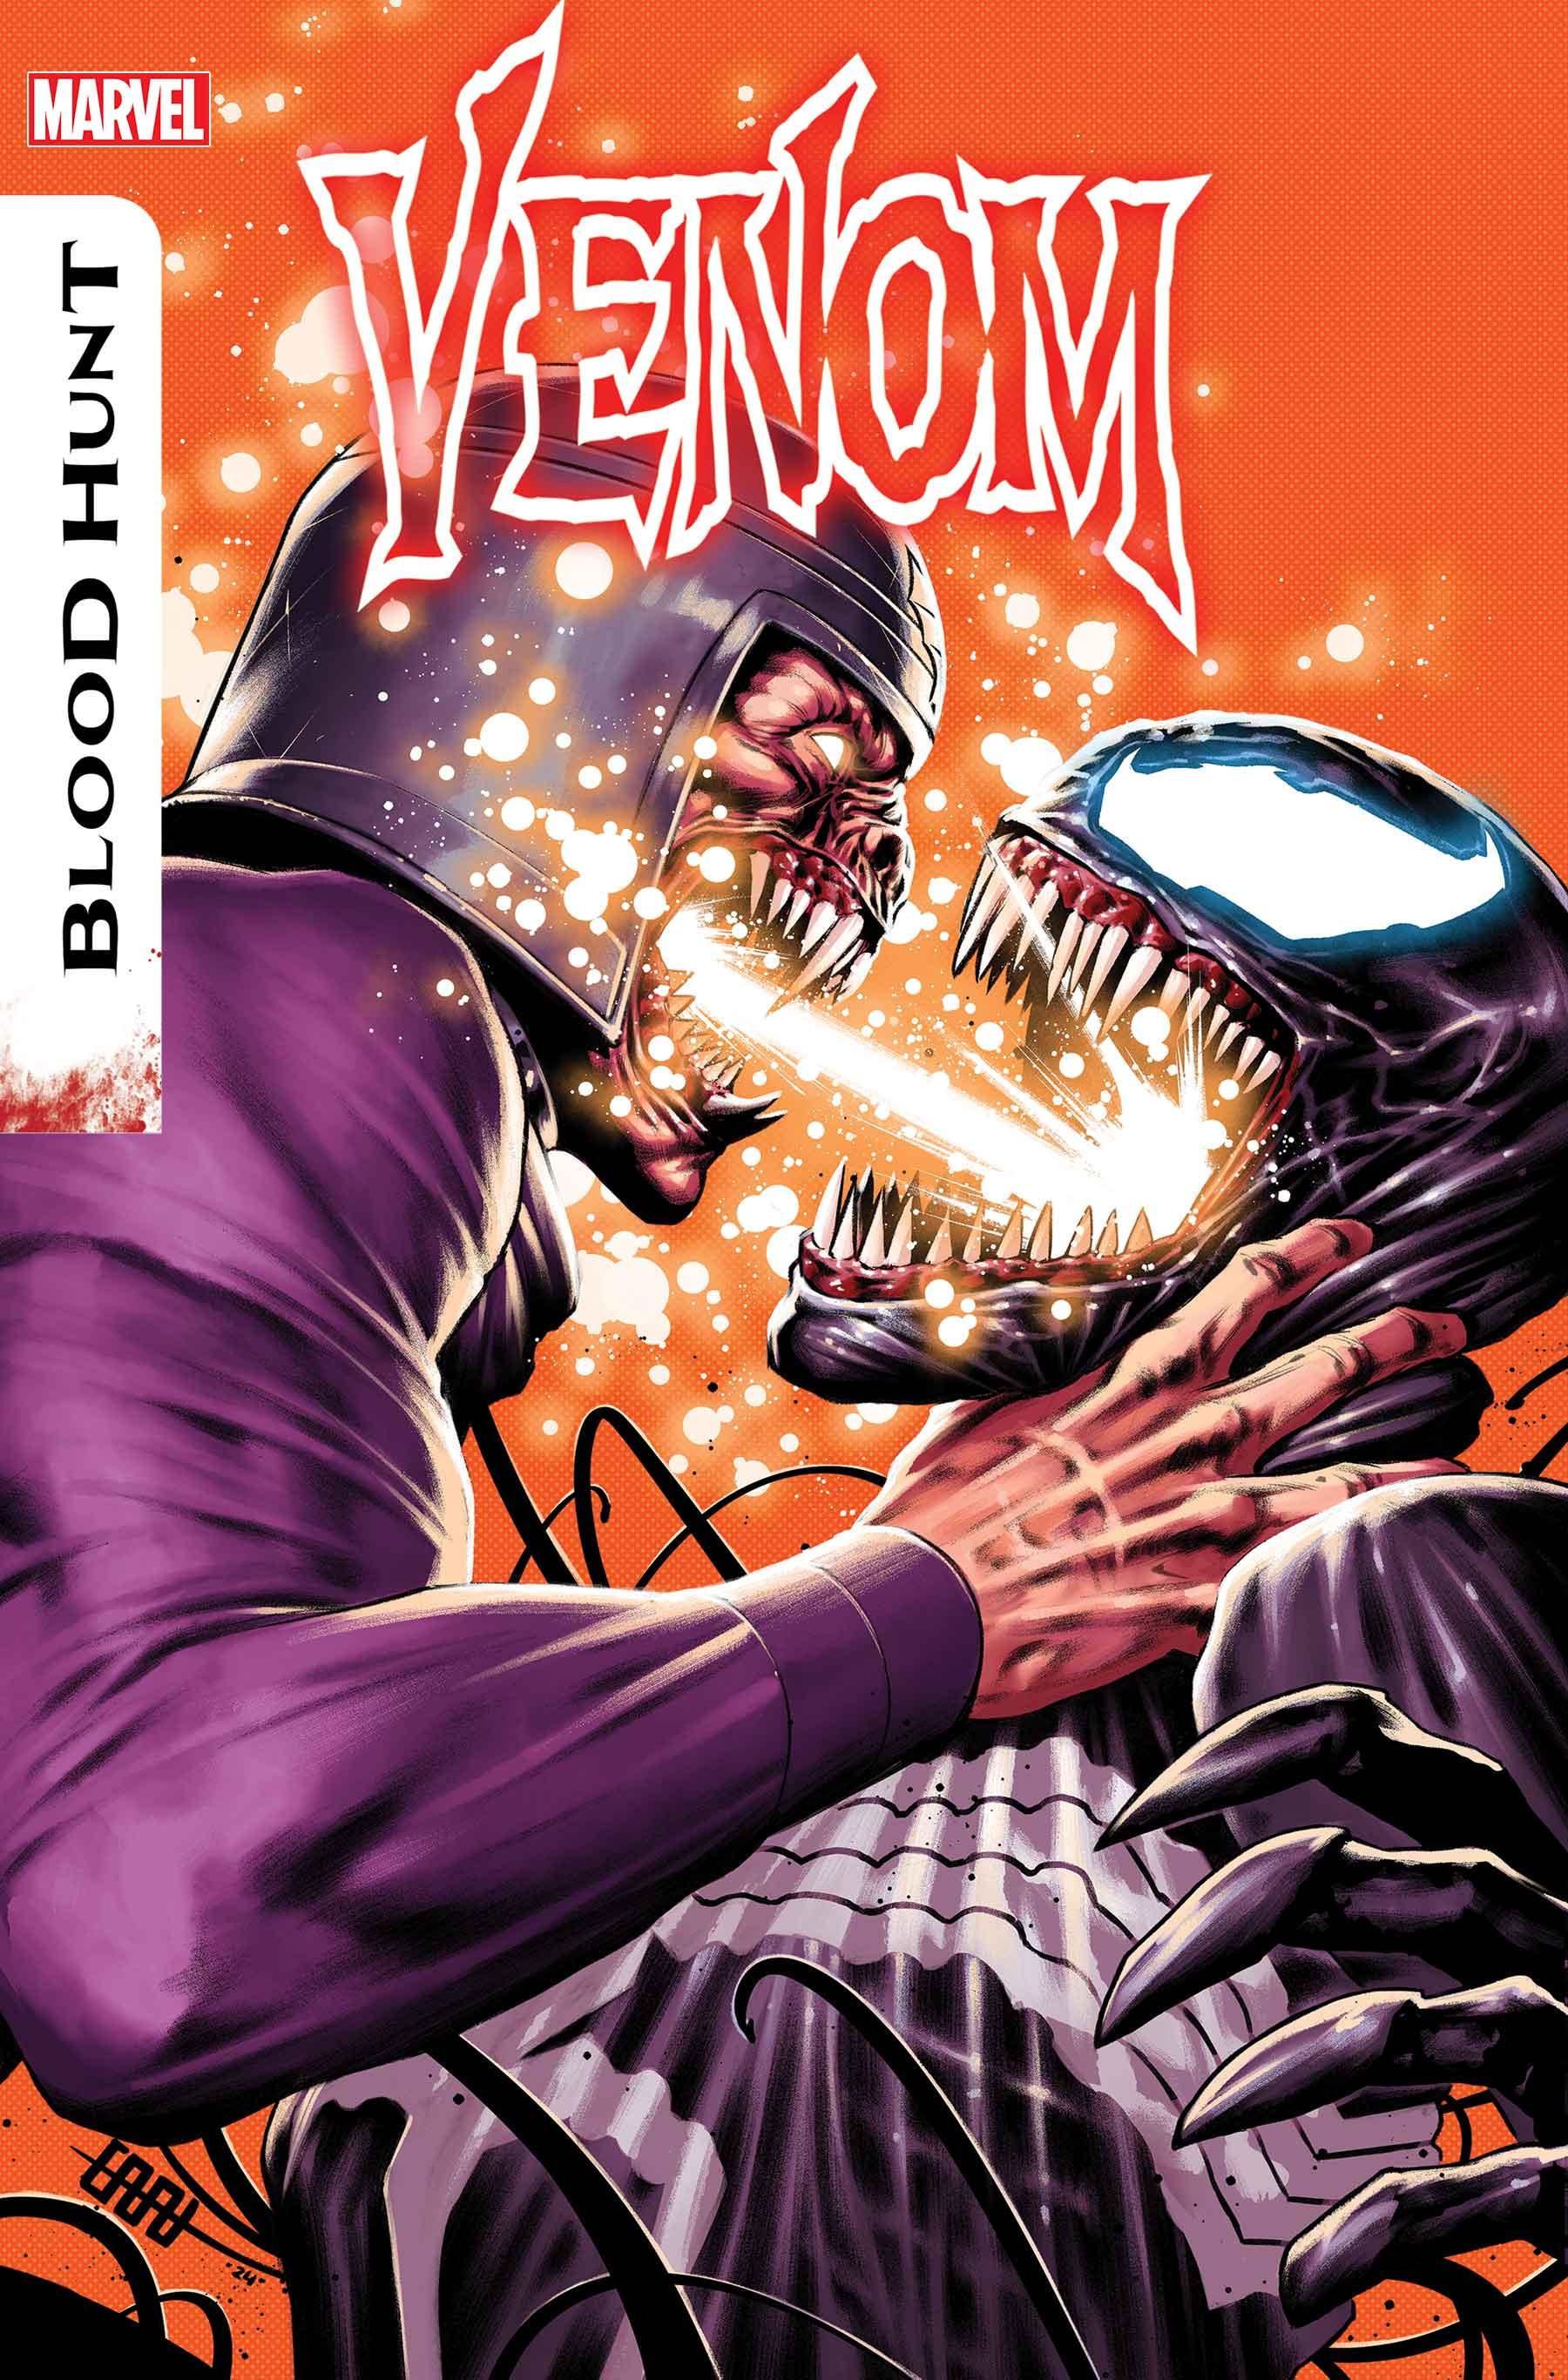 Venom #34 cover art